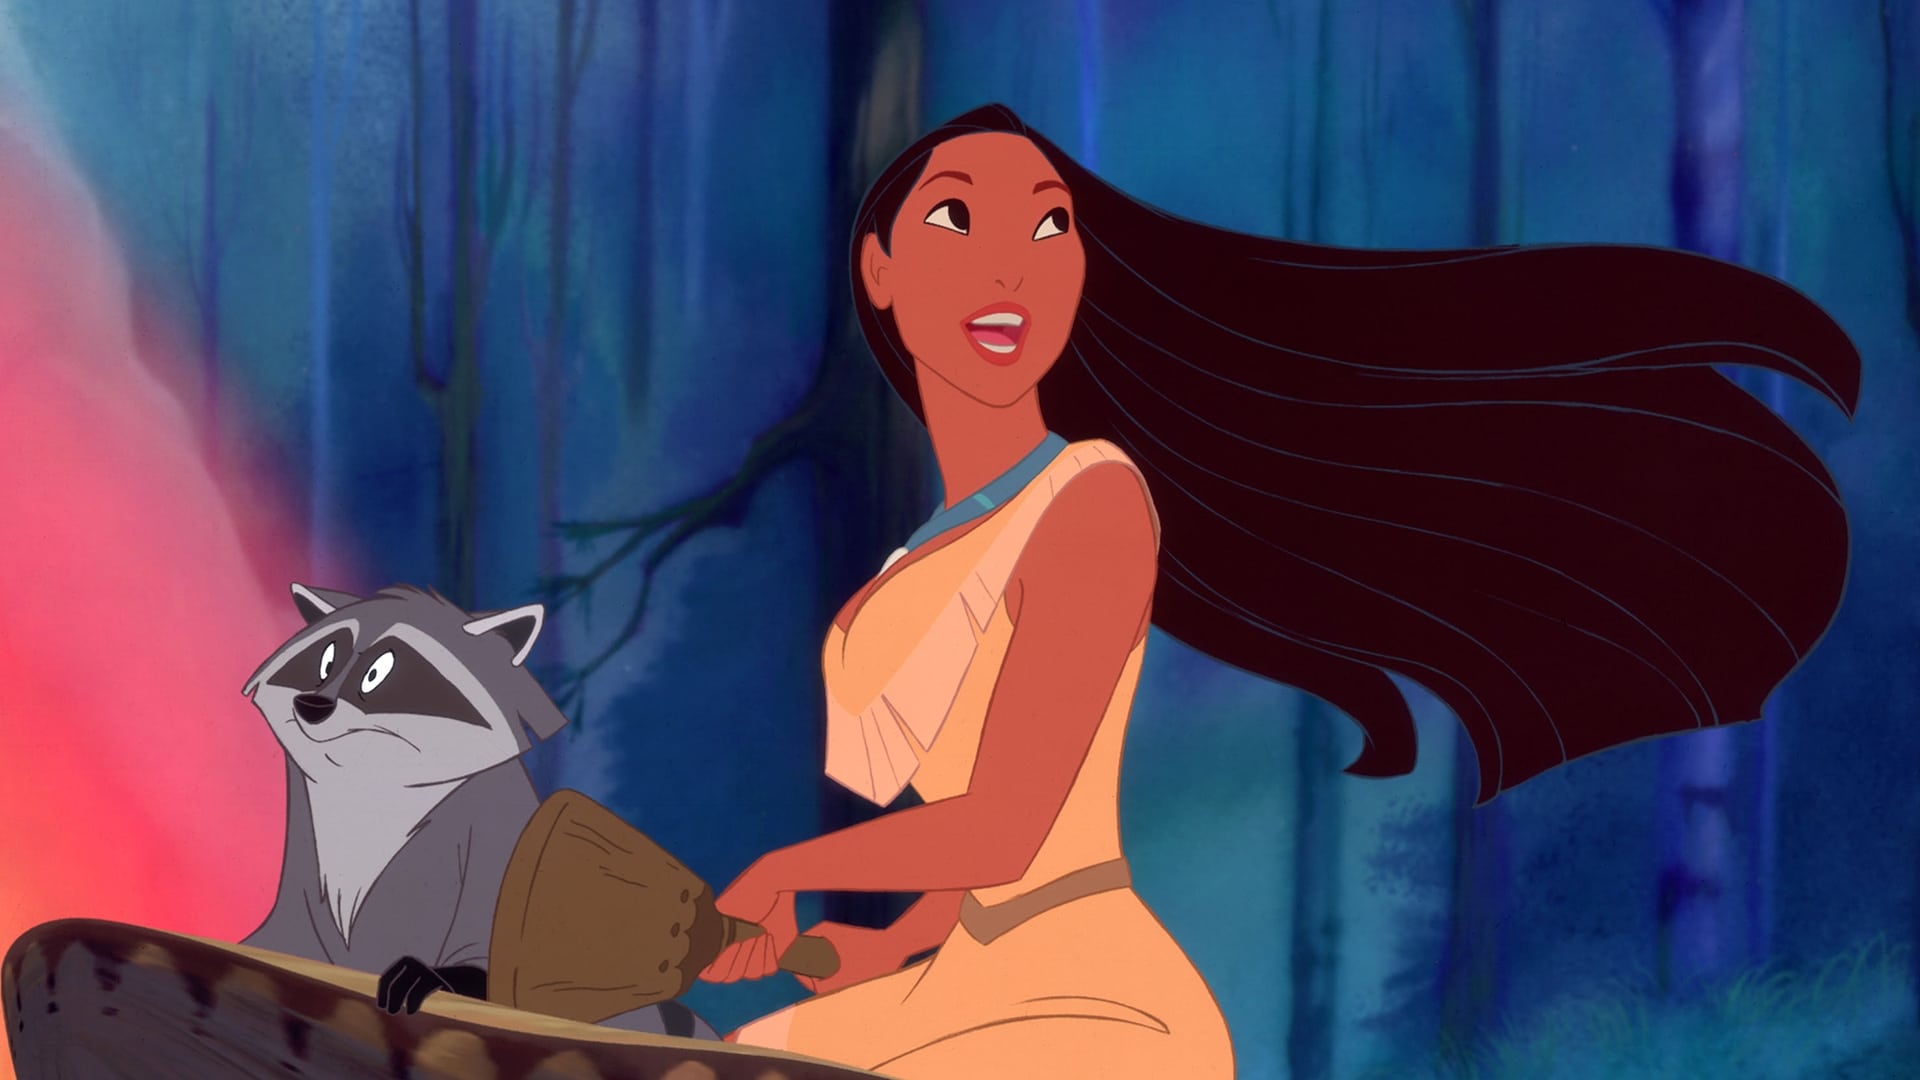 Image du film Pocahontas, une légende indienne dm6nralalocvgfzypl7pumvvxfrjpg